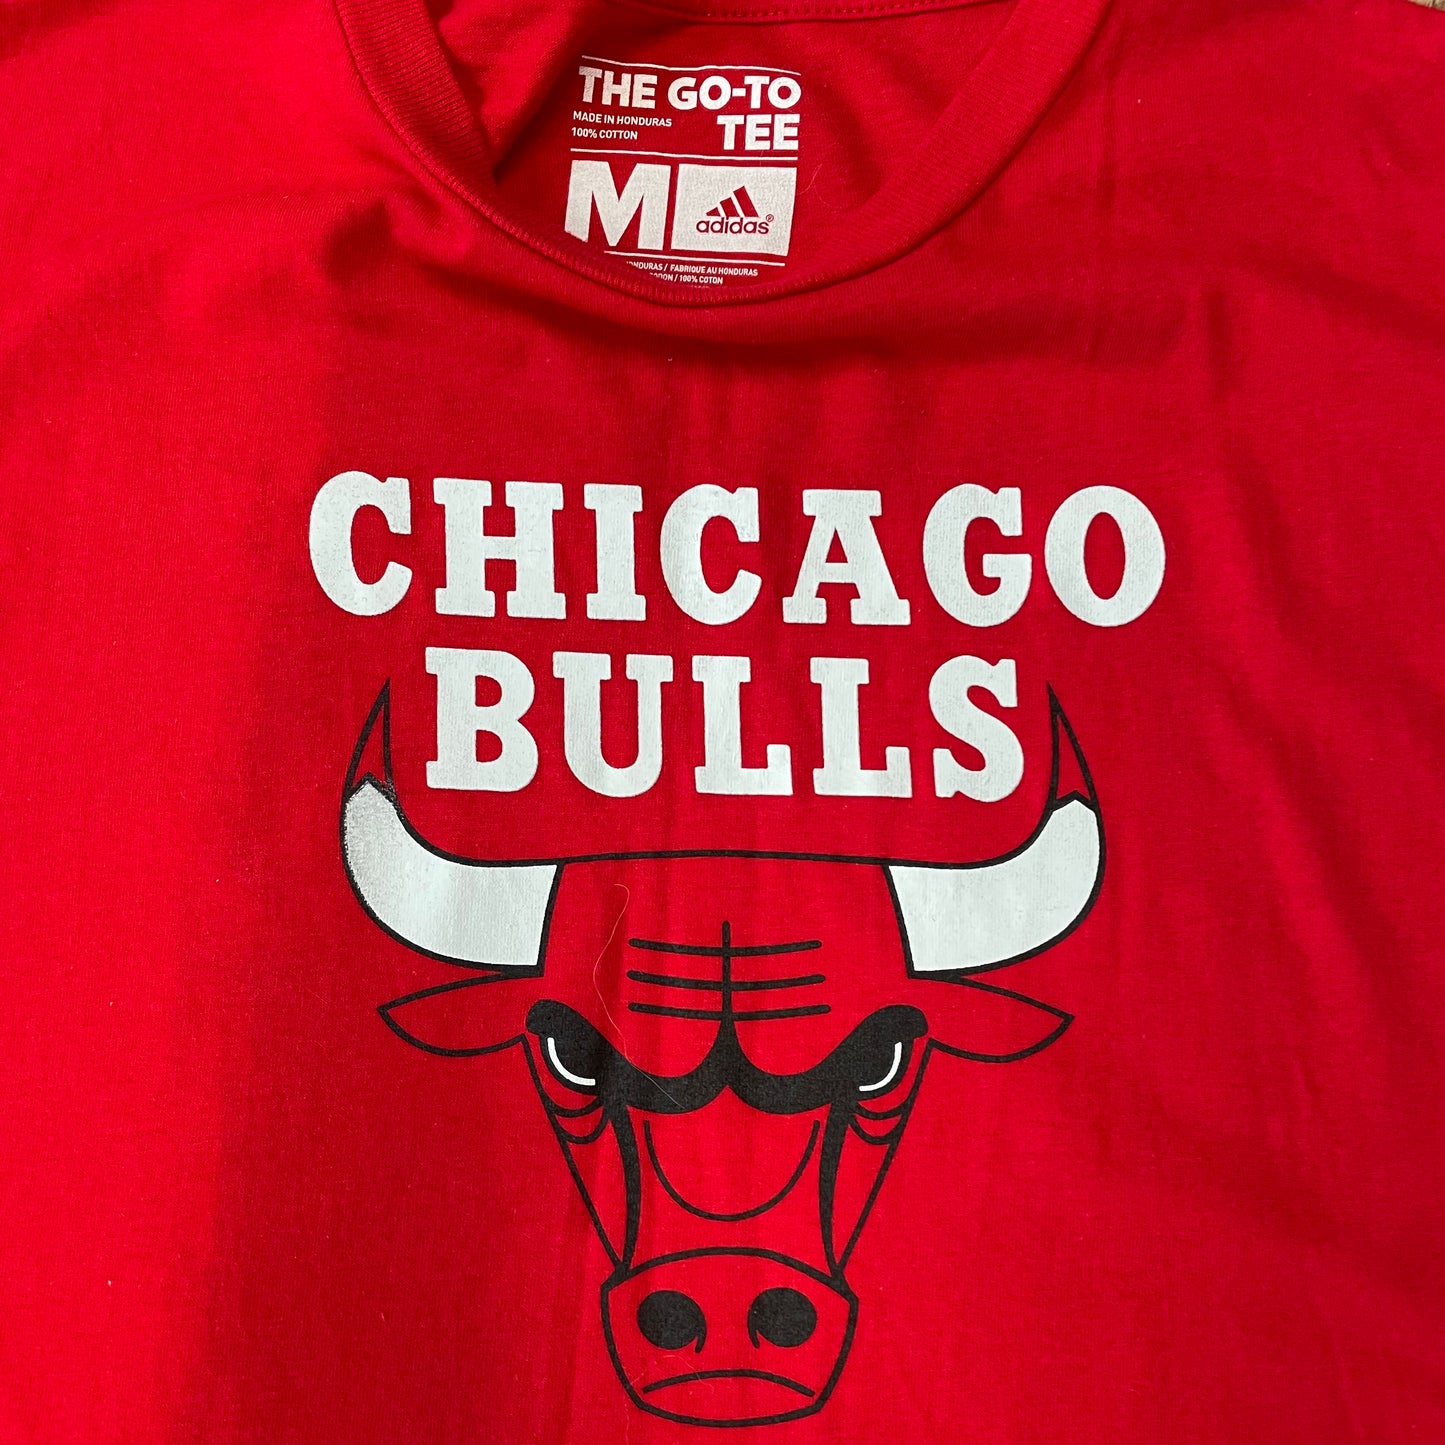 Chicago bulls T-shirt